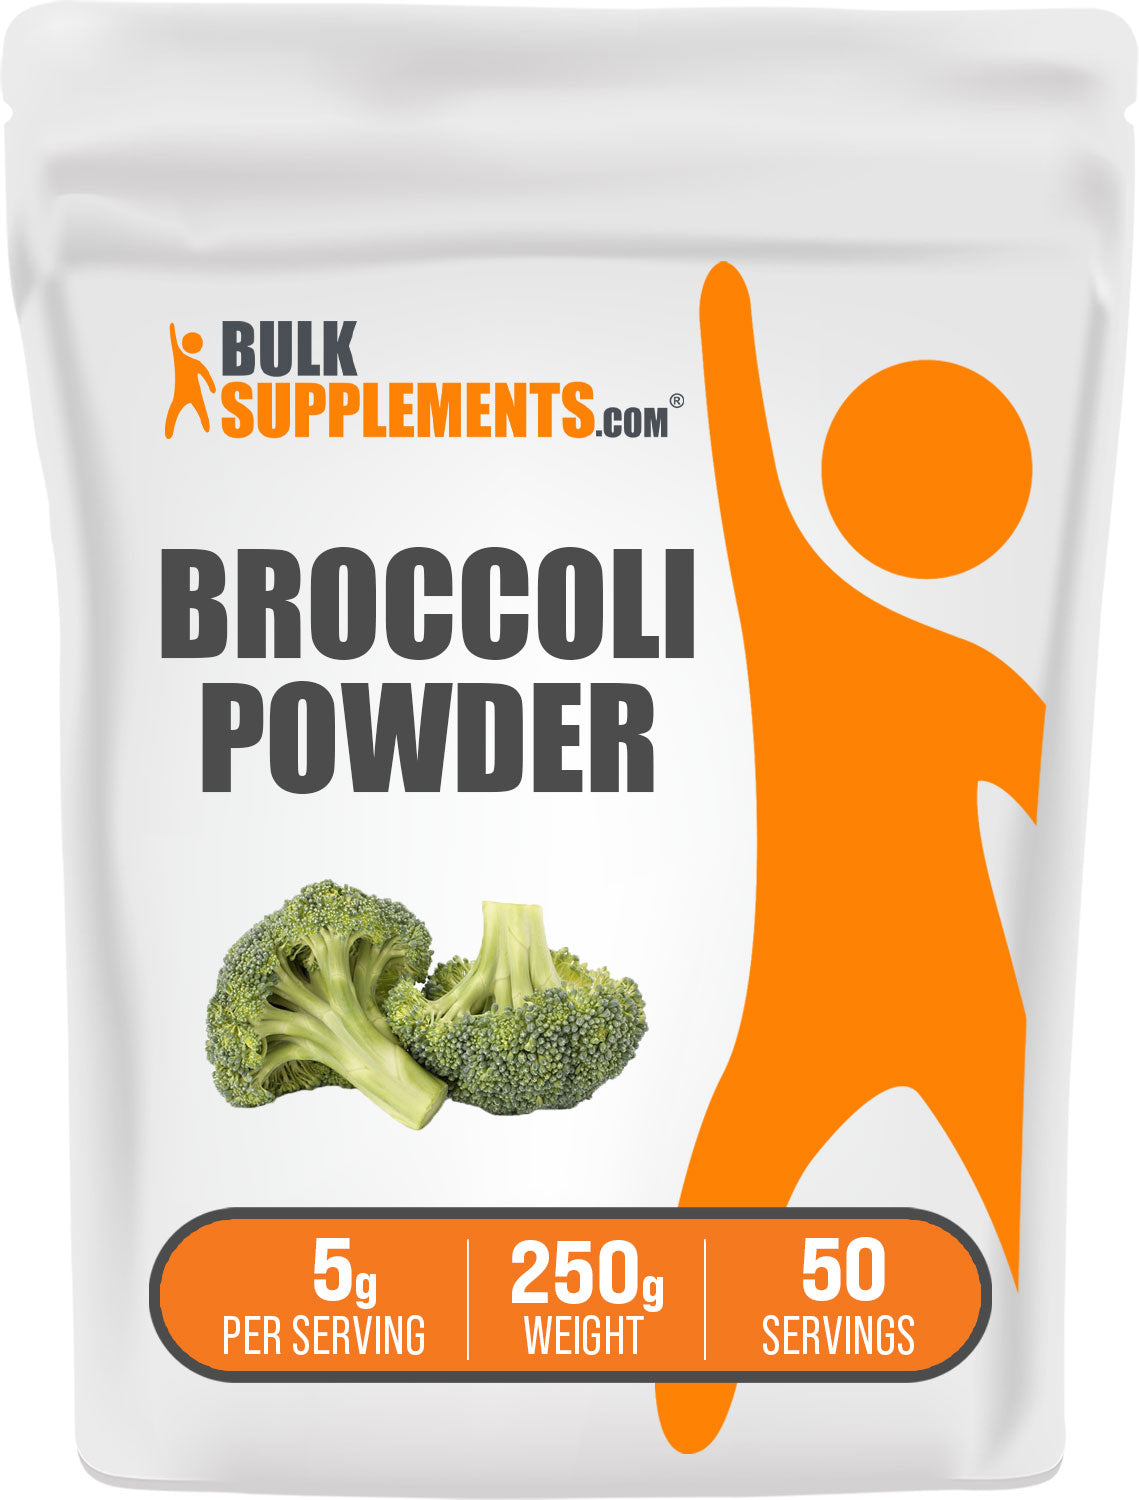 250g of broccoli powder